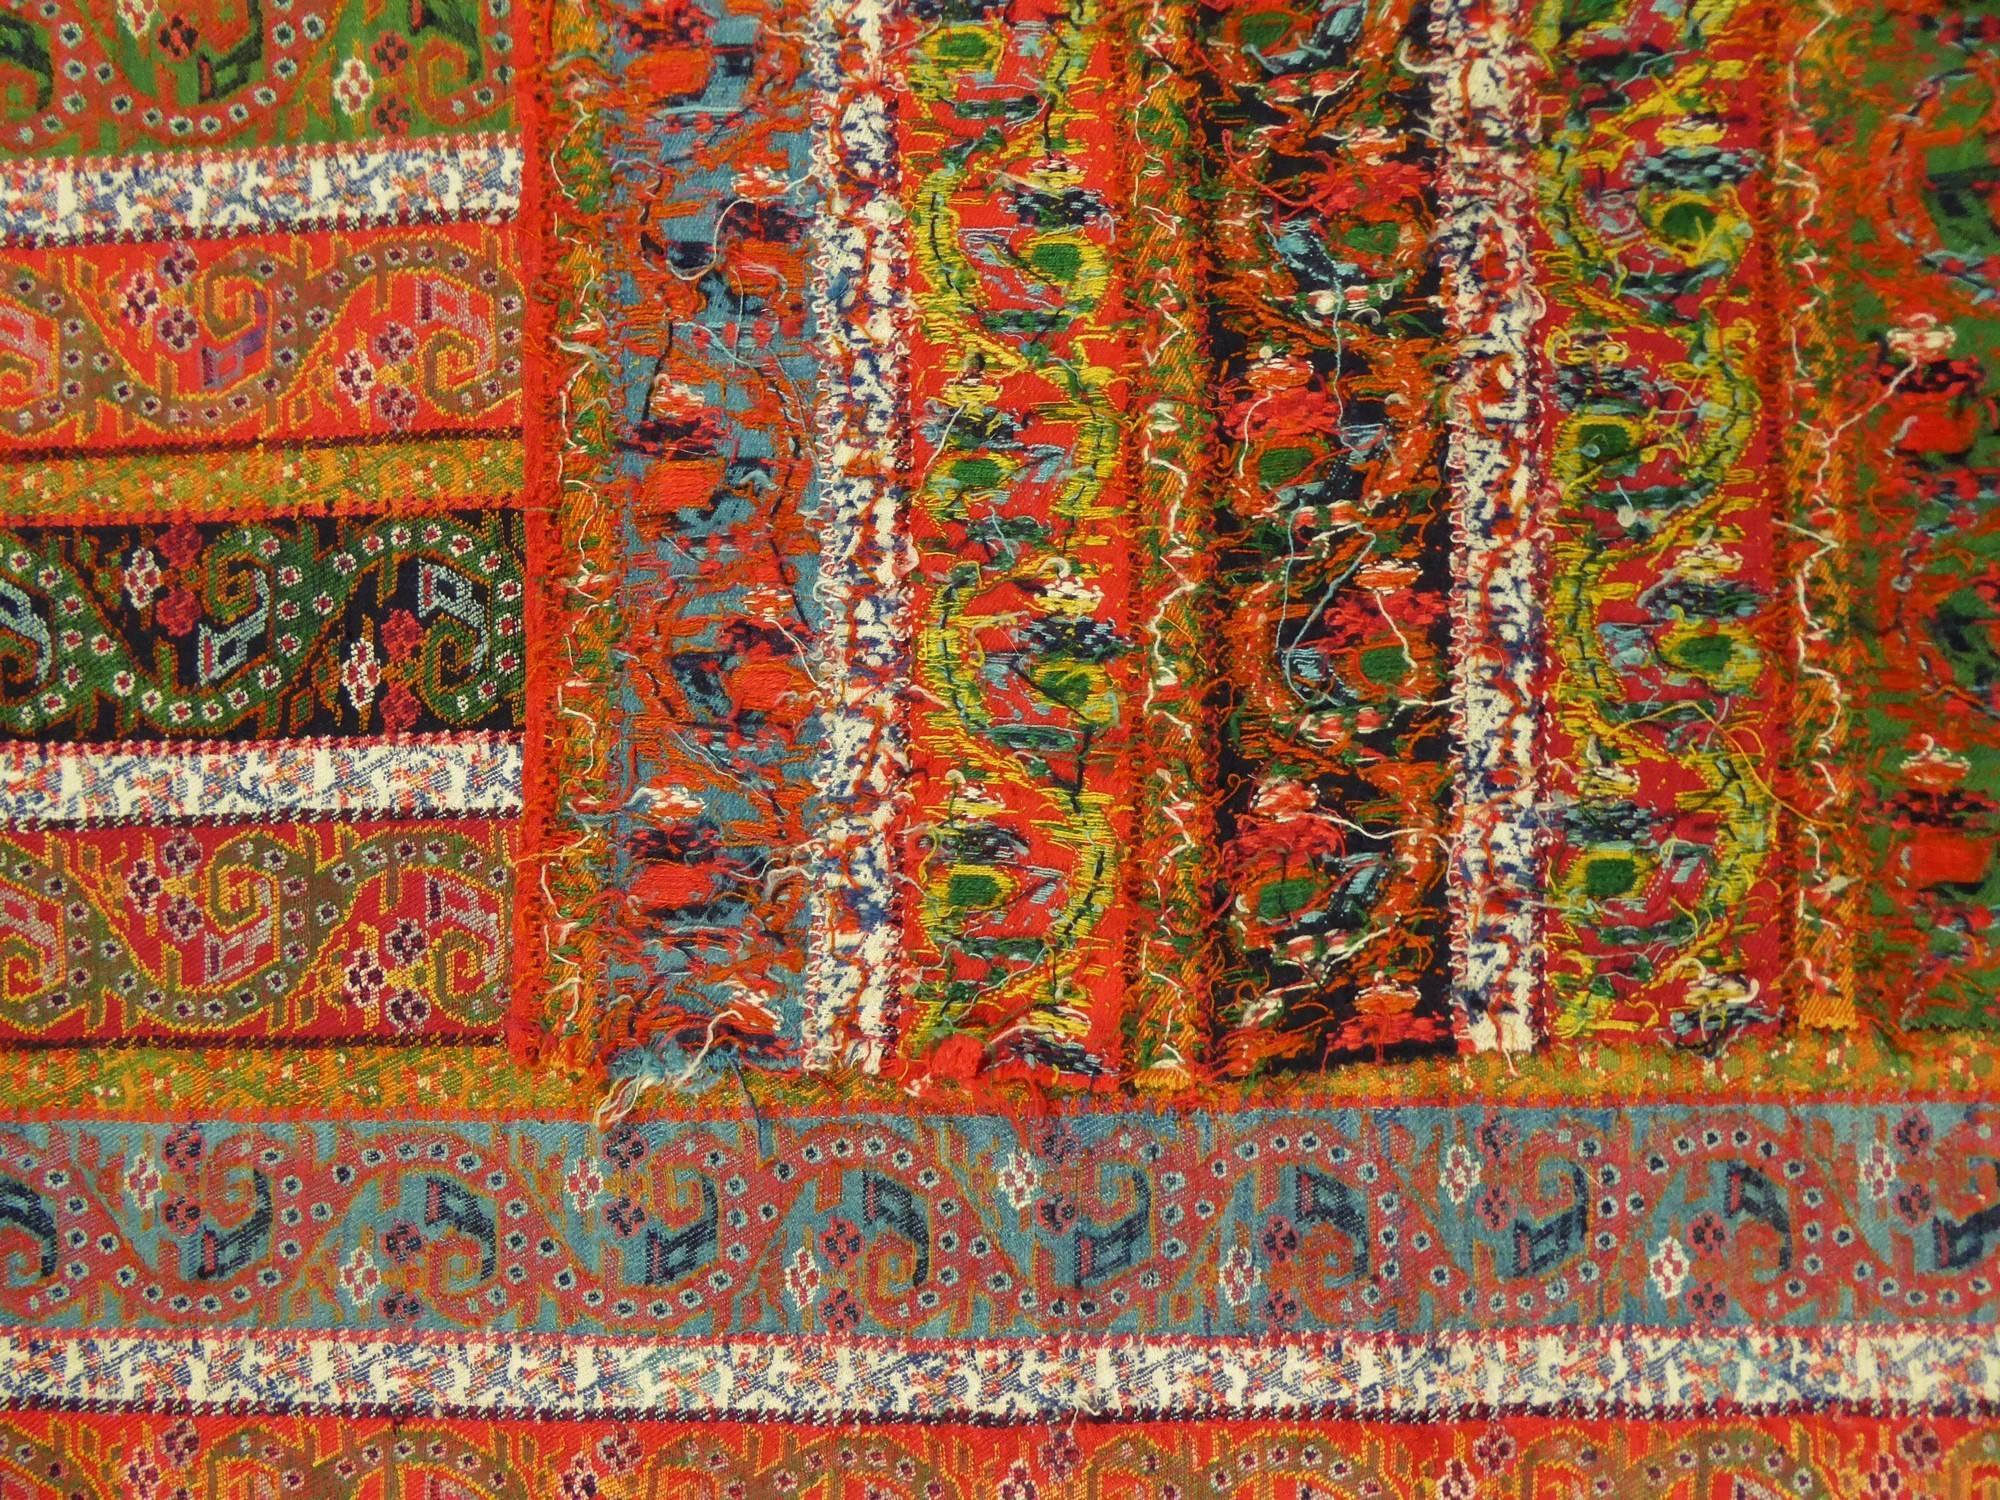 Twill weave striped kashmir shawl  - India or Persia 19th century 8